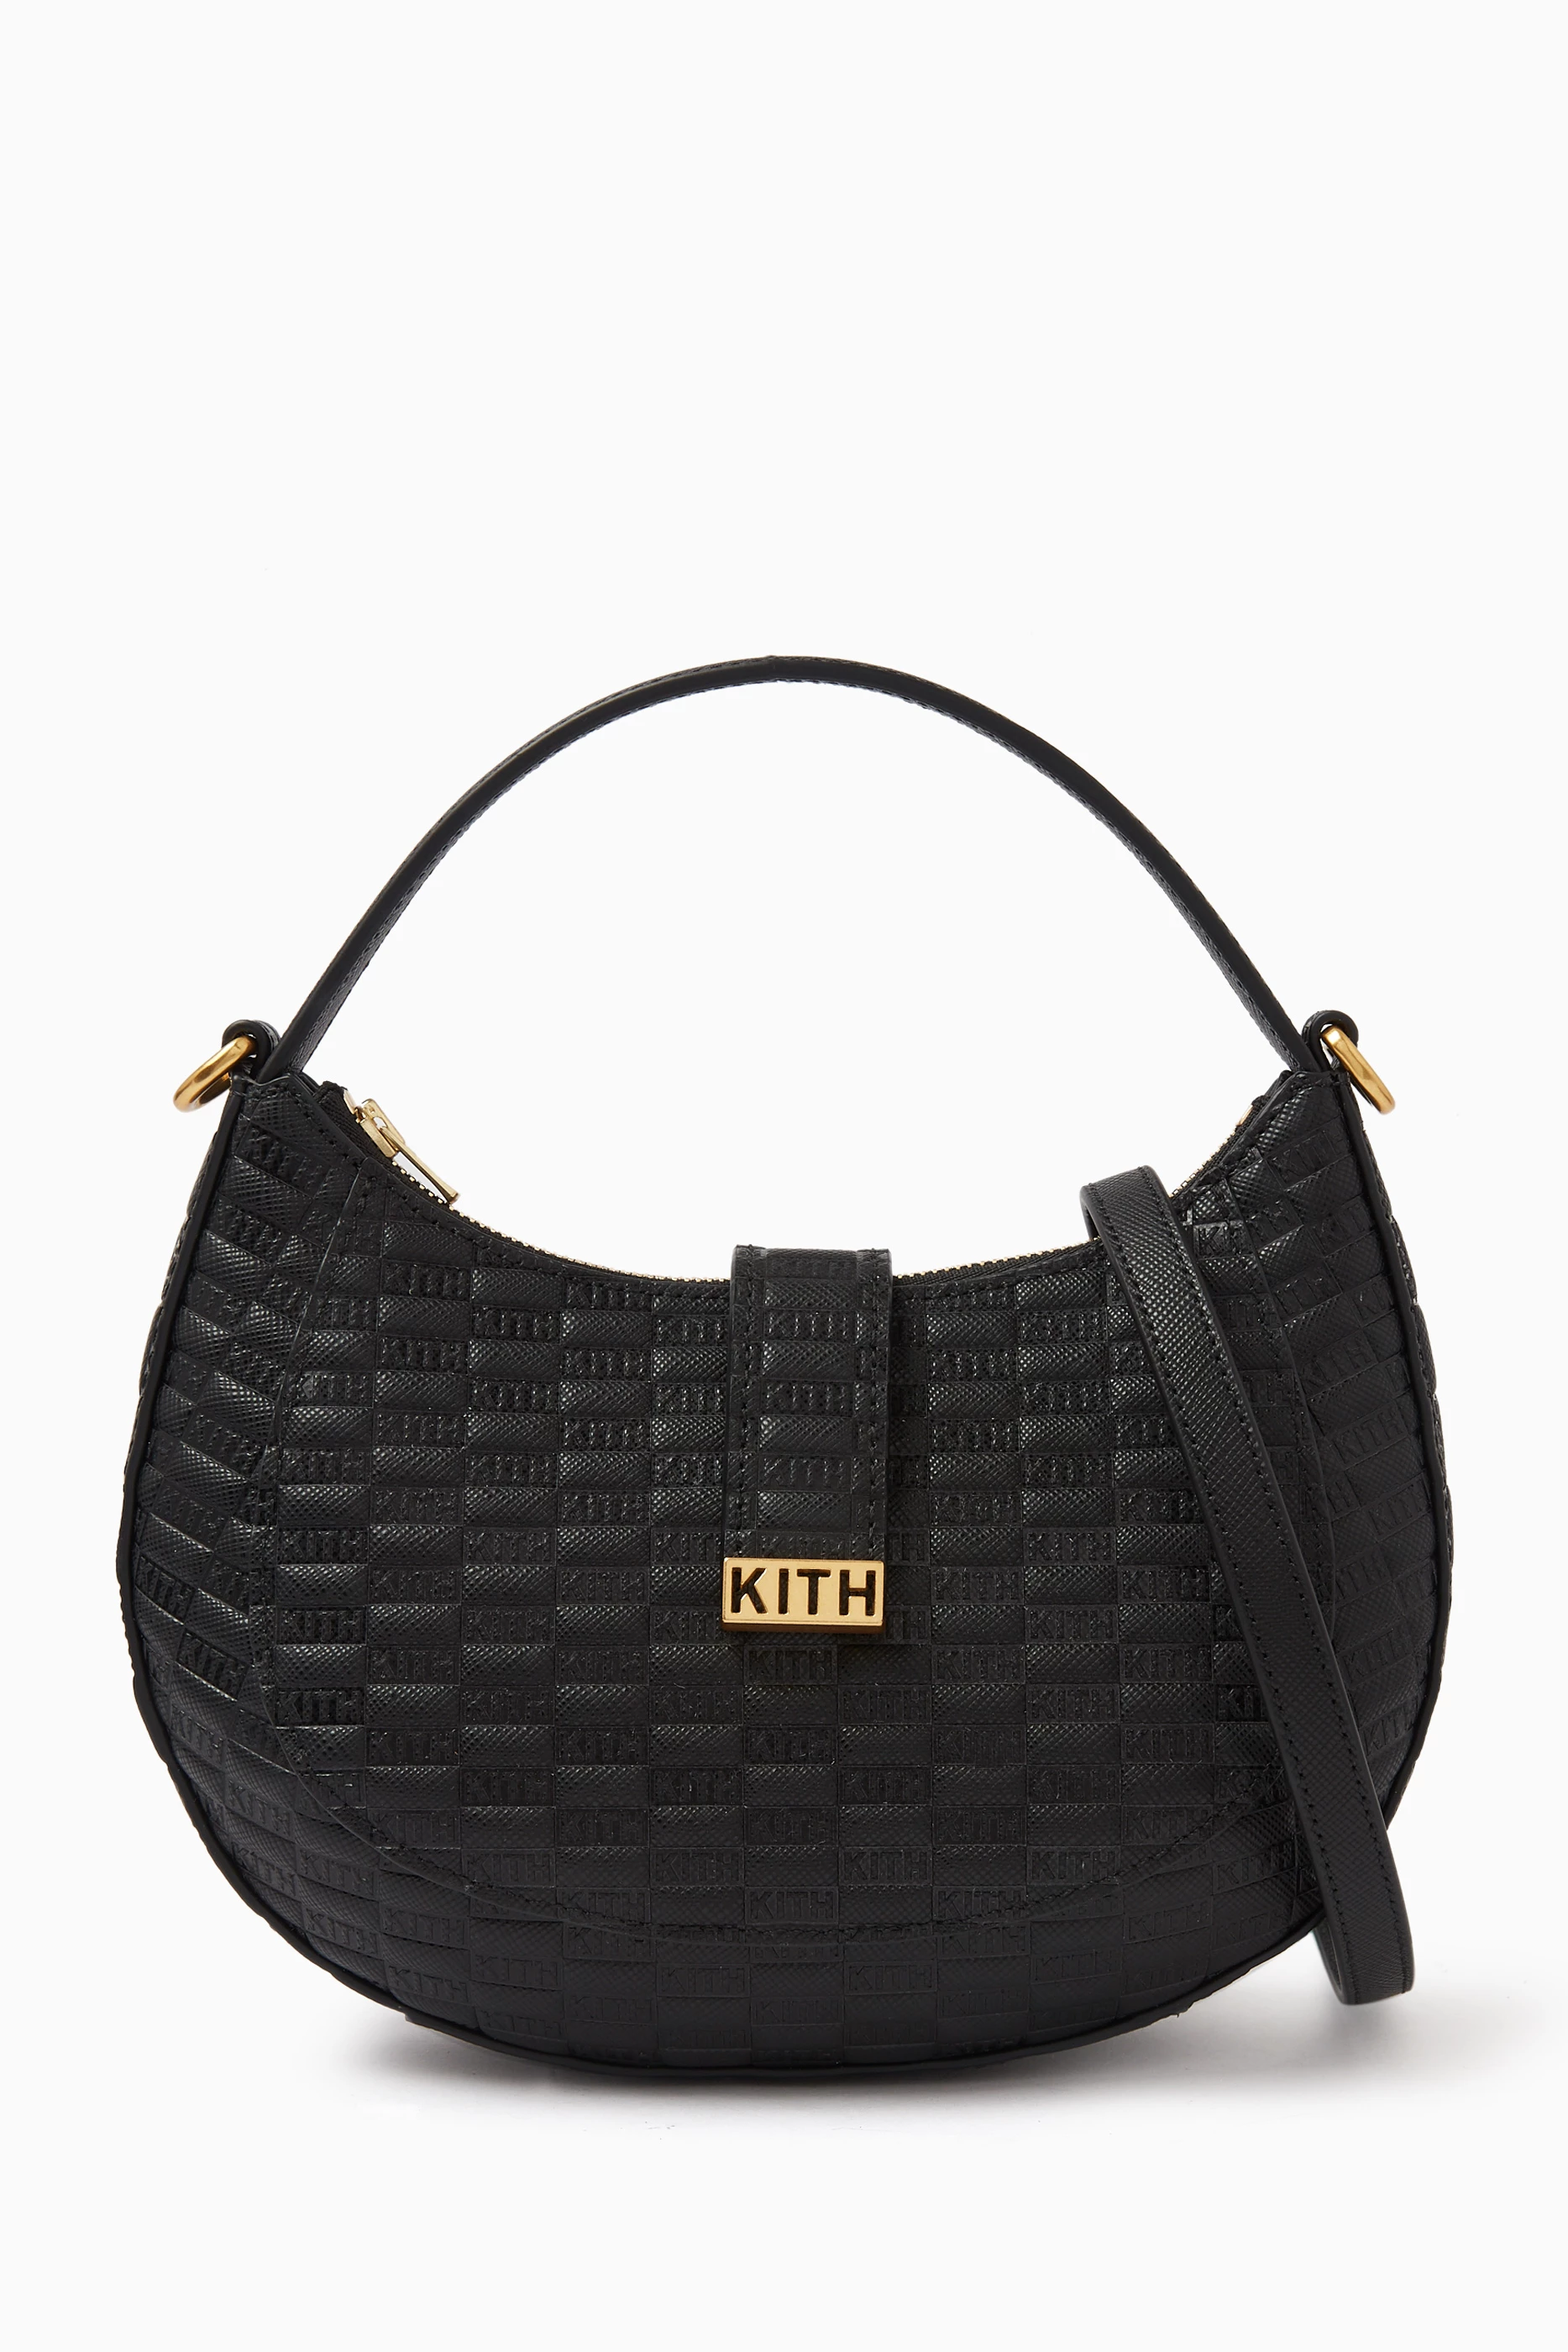 Buy Kith Black Mini Monogram Saddle Bag in Saffiano Leather ...